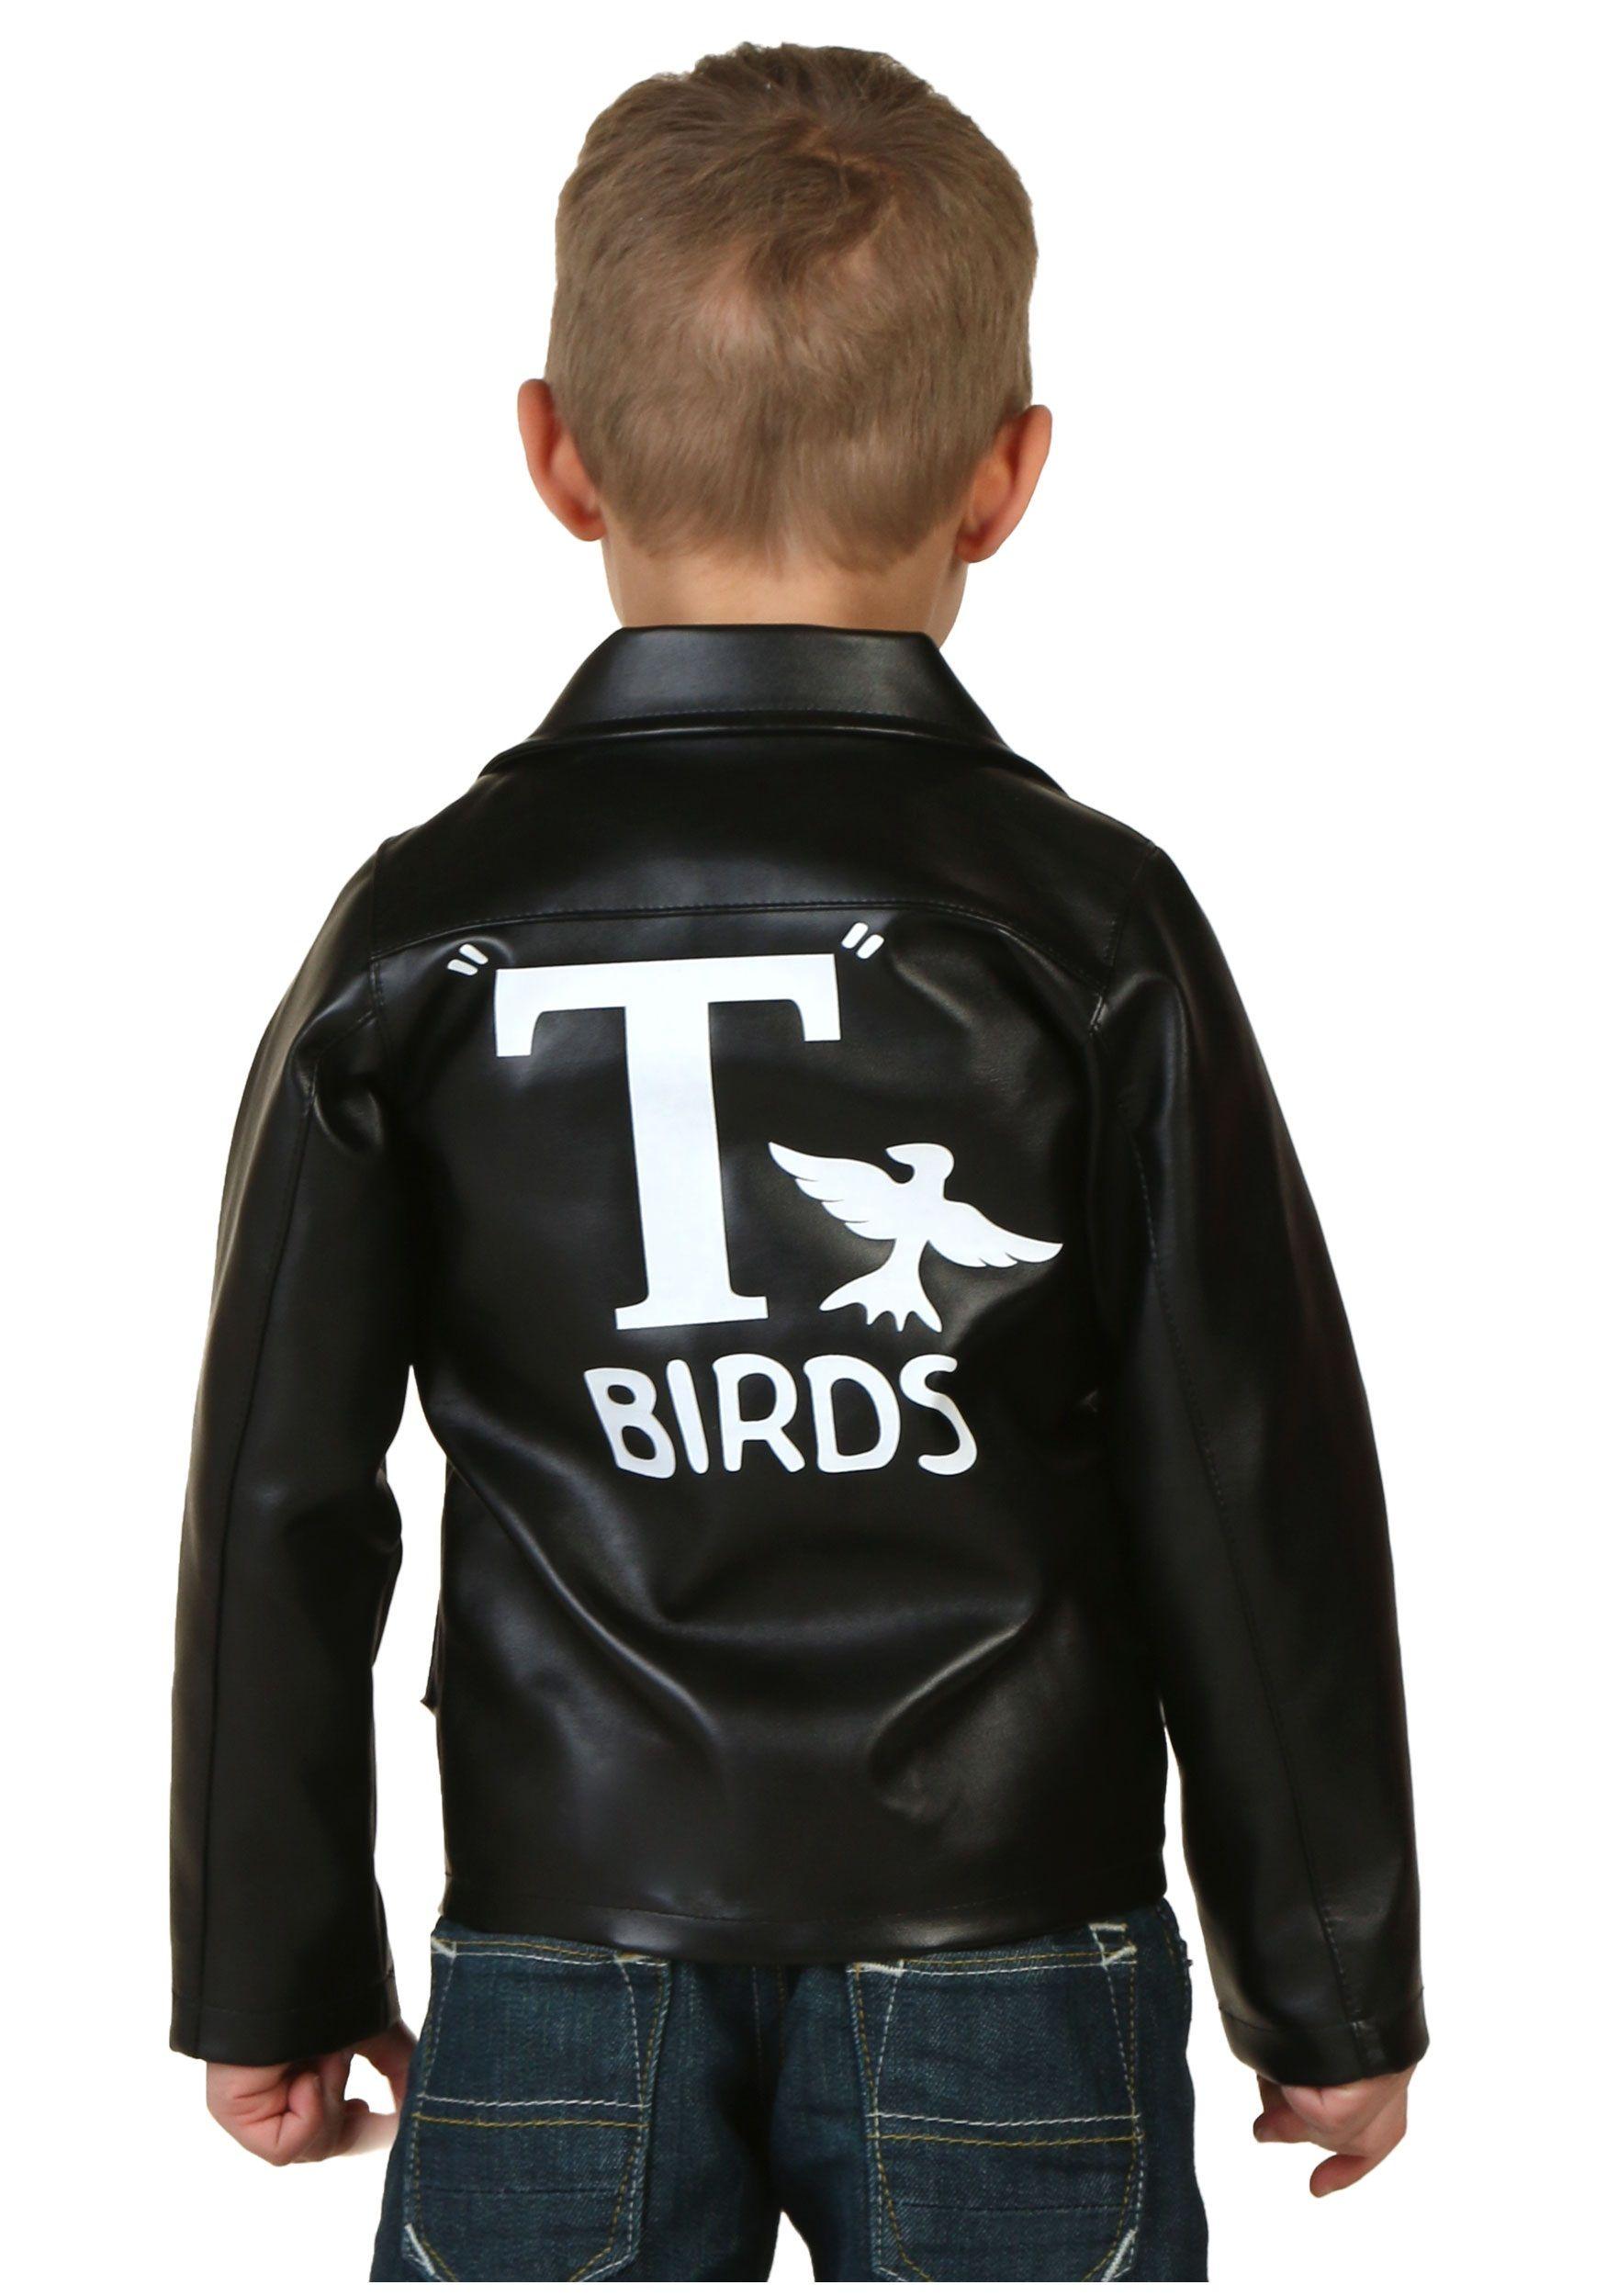 T- Birds Logo - Toddler Grease T-Birds Jacket Costume